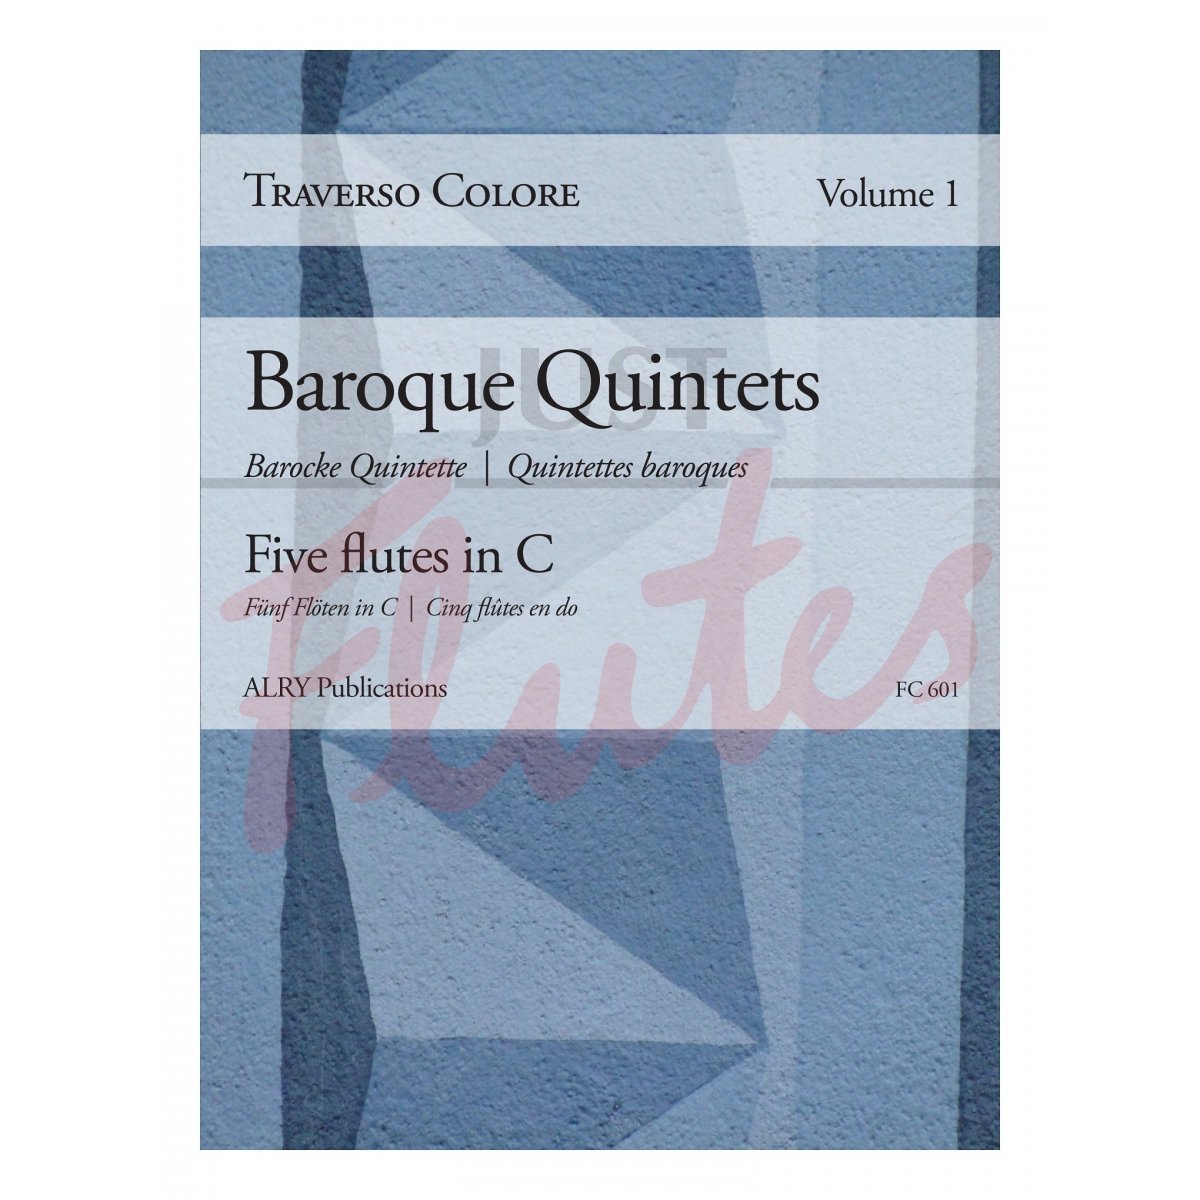 Traverso Colore, Volume 1 - Baroque Quintets [Flutes]